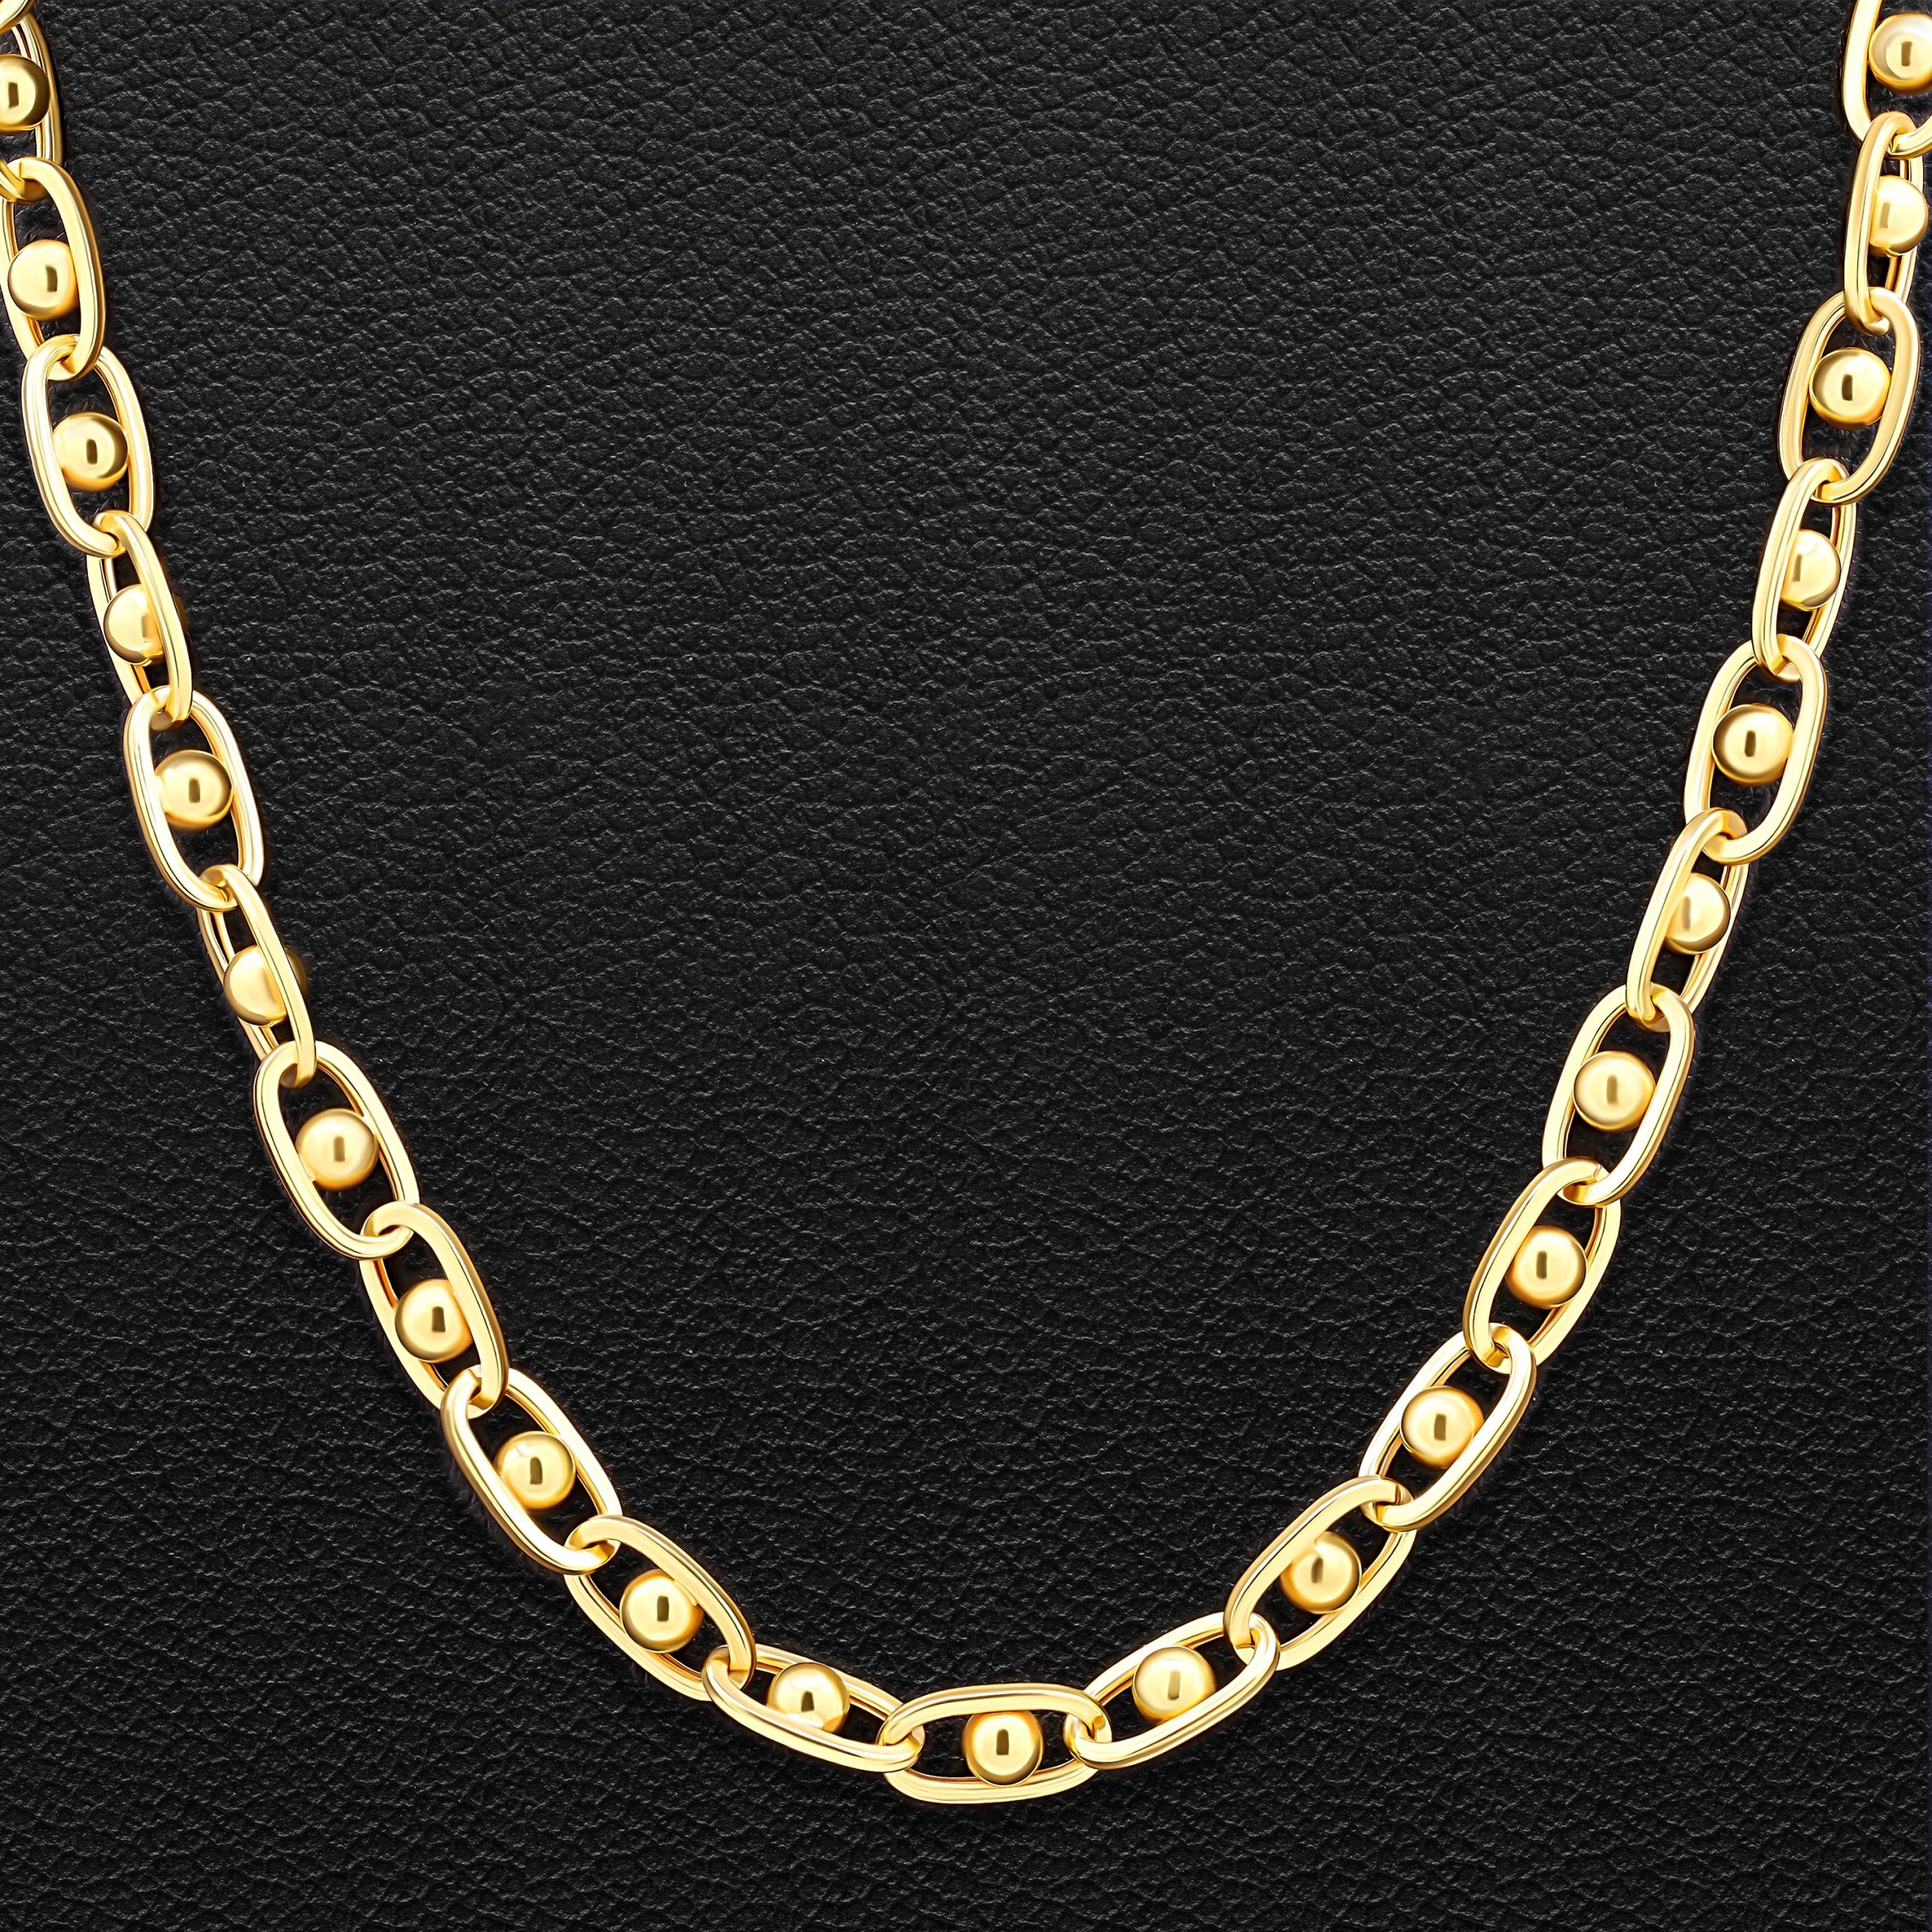 22k gold chain